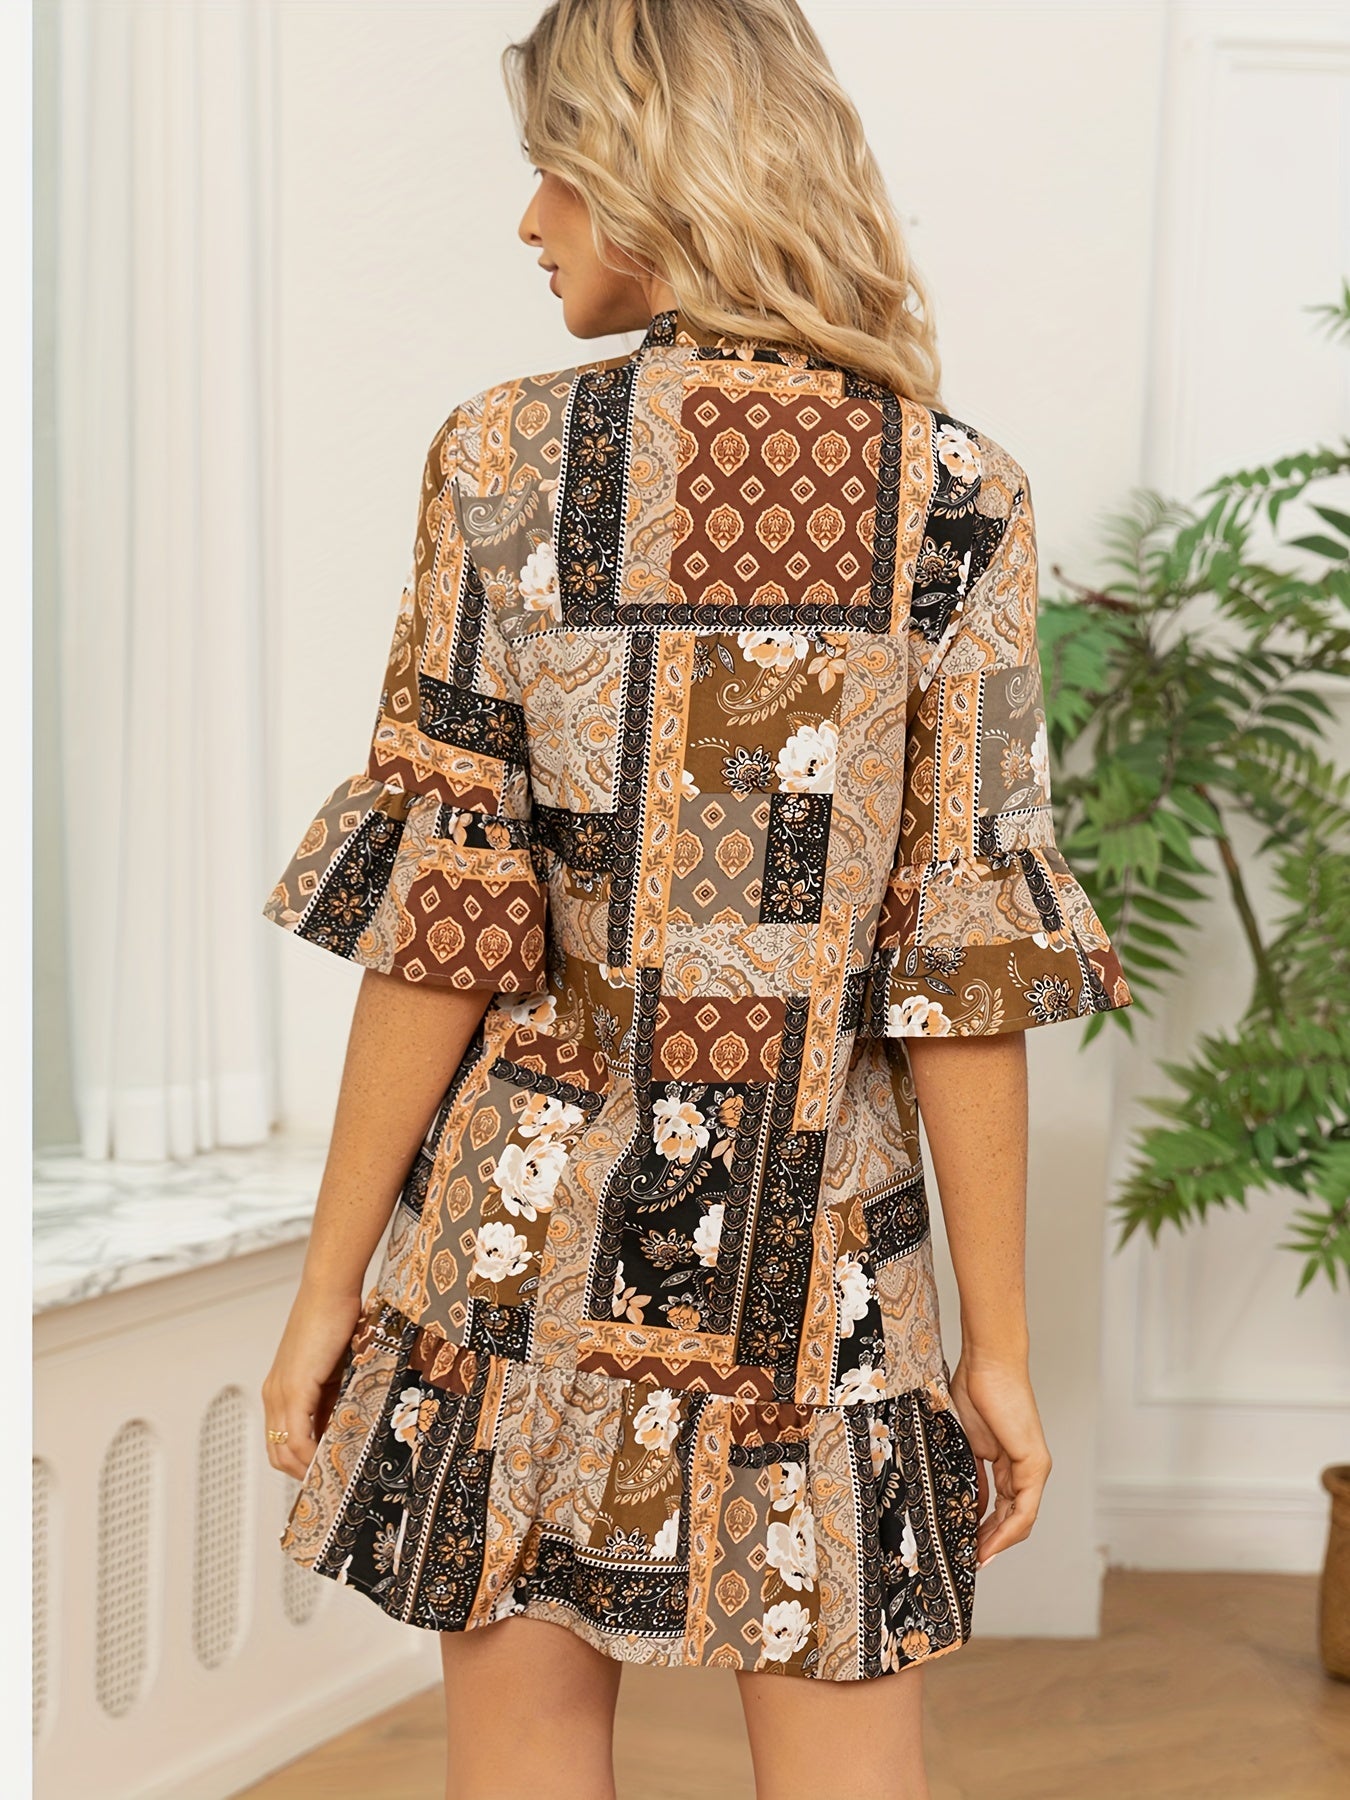 Patchwork Print Dress, Boho Ruffle Trim Button Front Dress, Women's Clothing